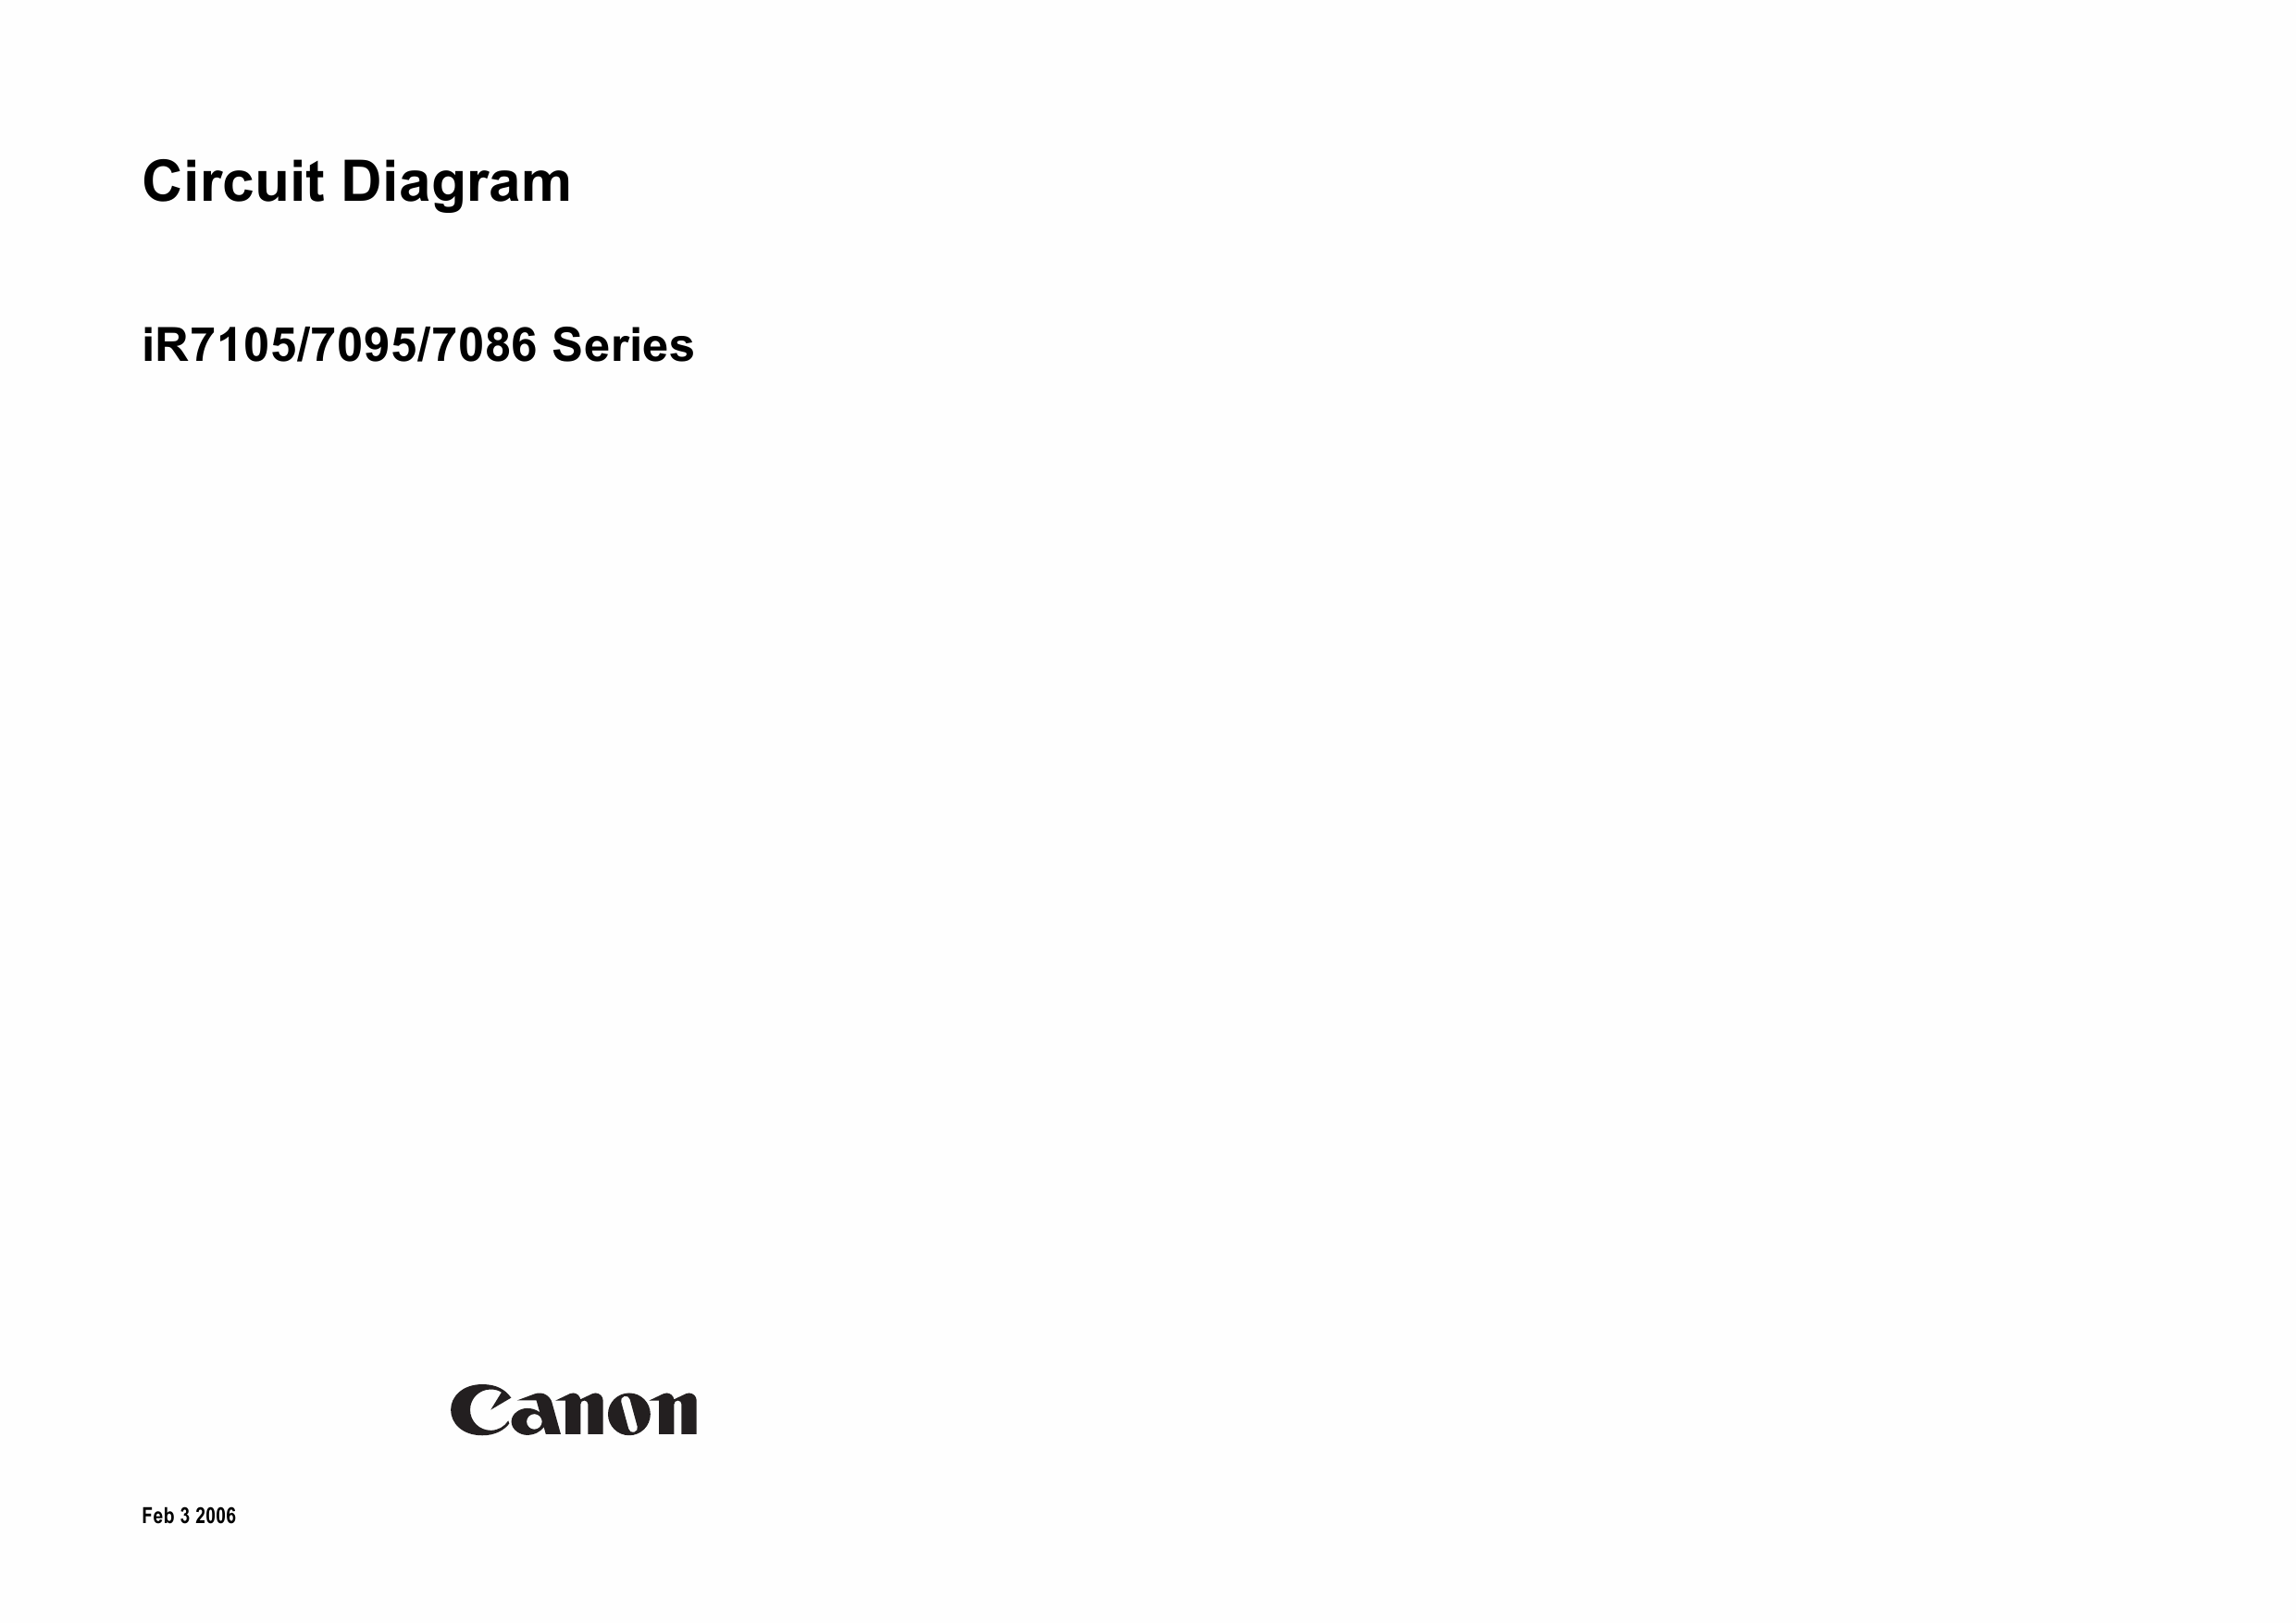 Canon imageRUNNER-iR 7105 7095 7086 Circuit Diagram-1